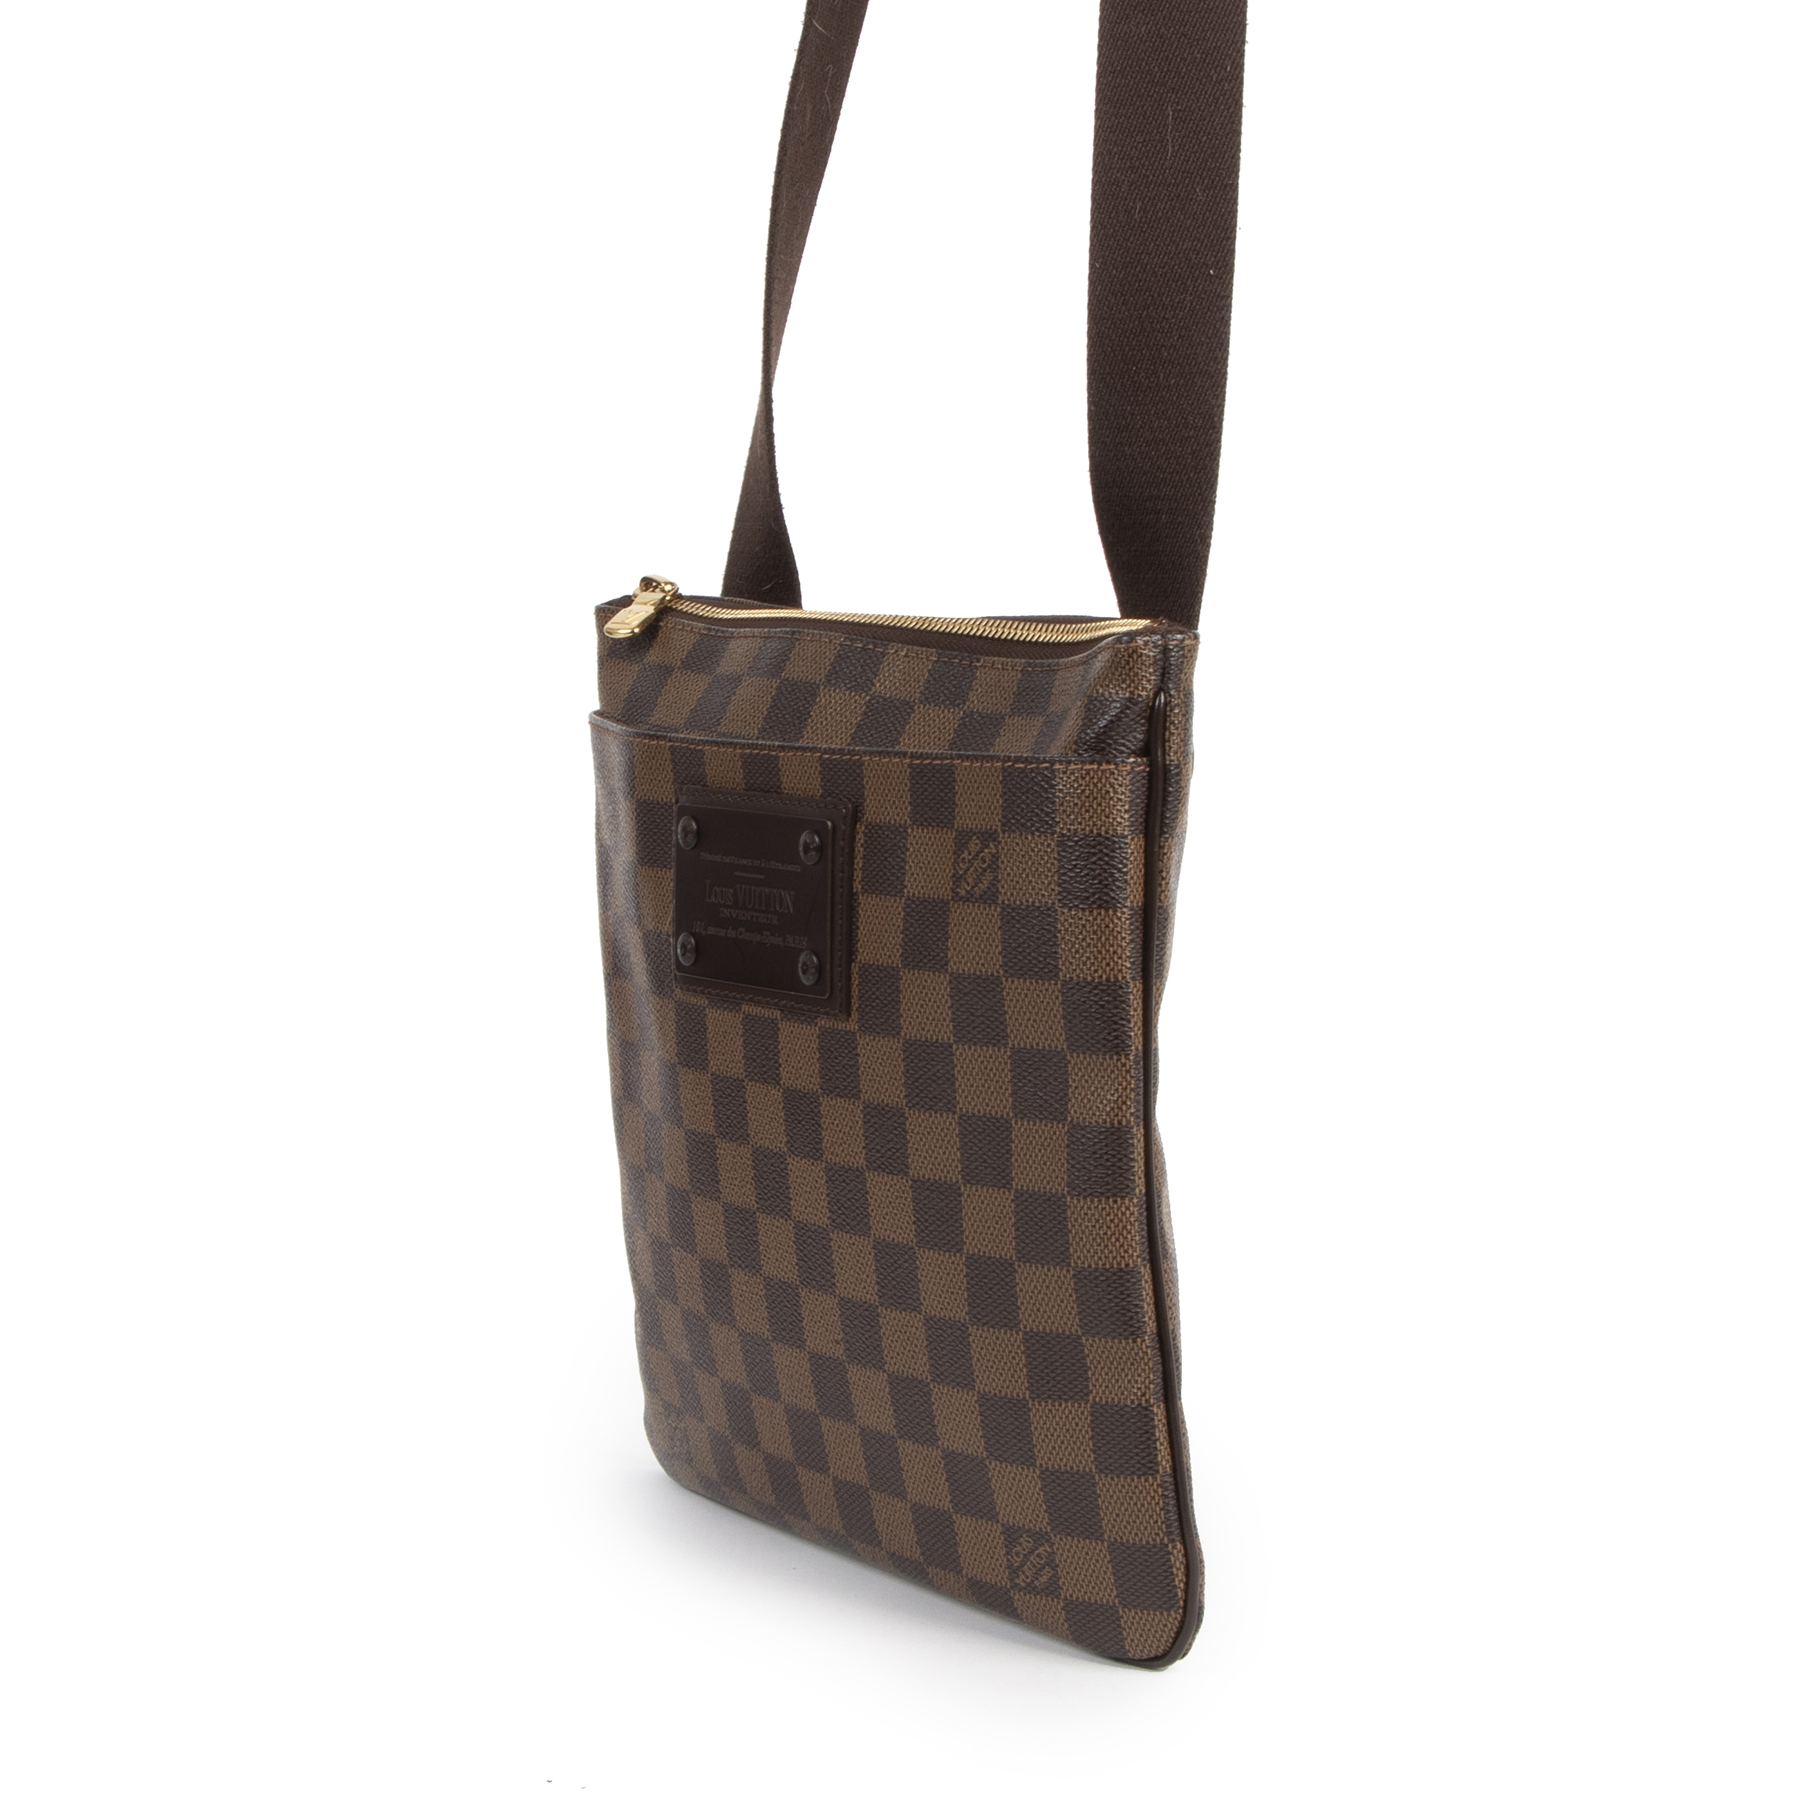 Louis Vuitton inventpdr crossover bag